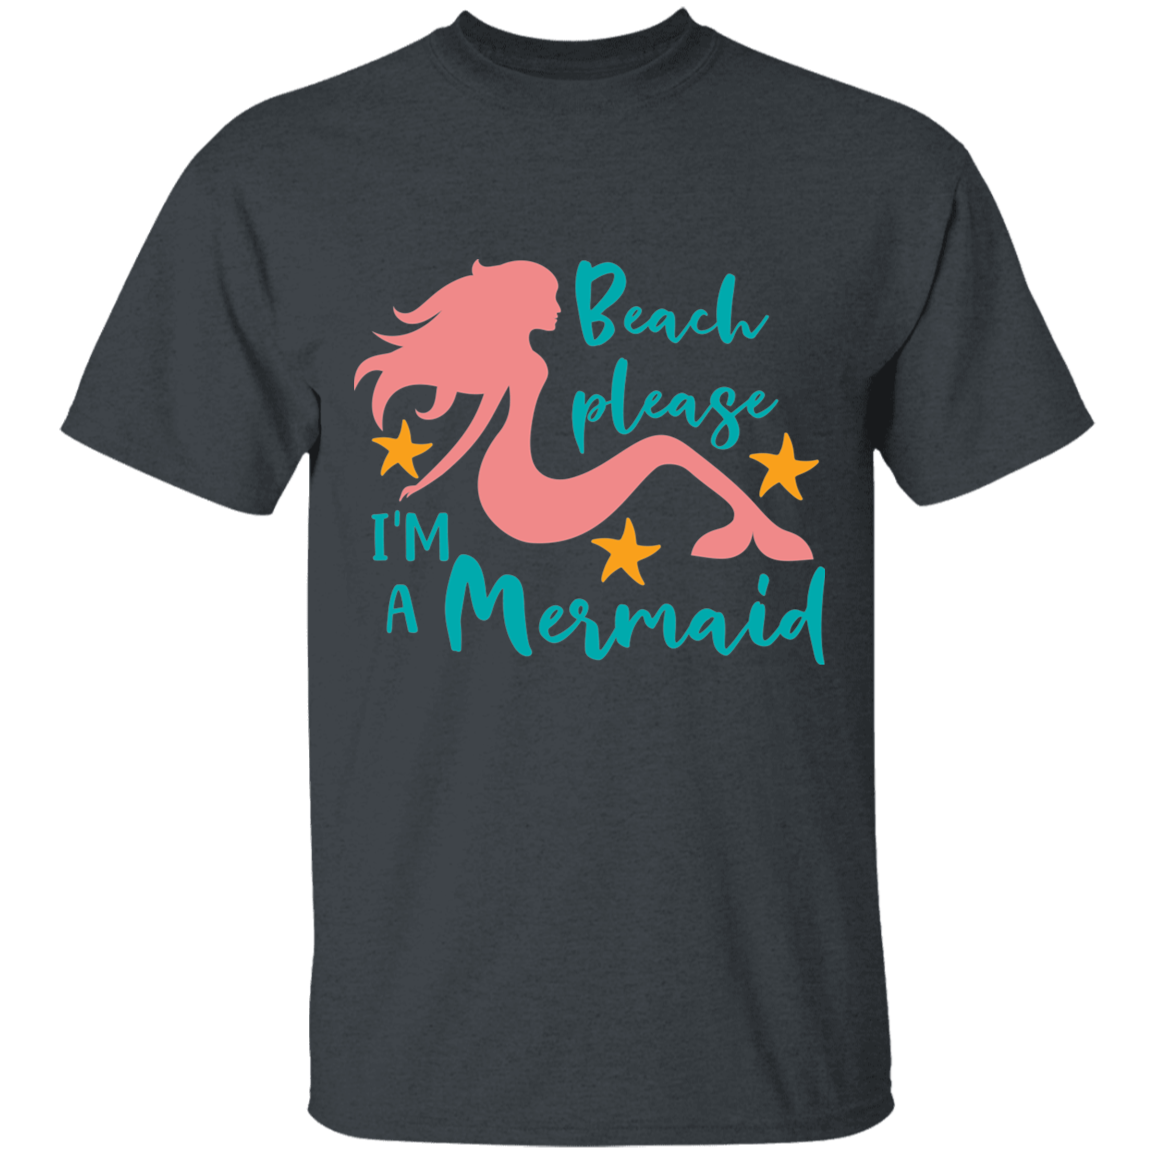 Mermaid t'shirt